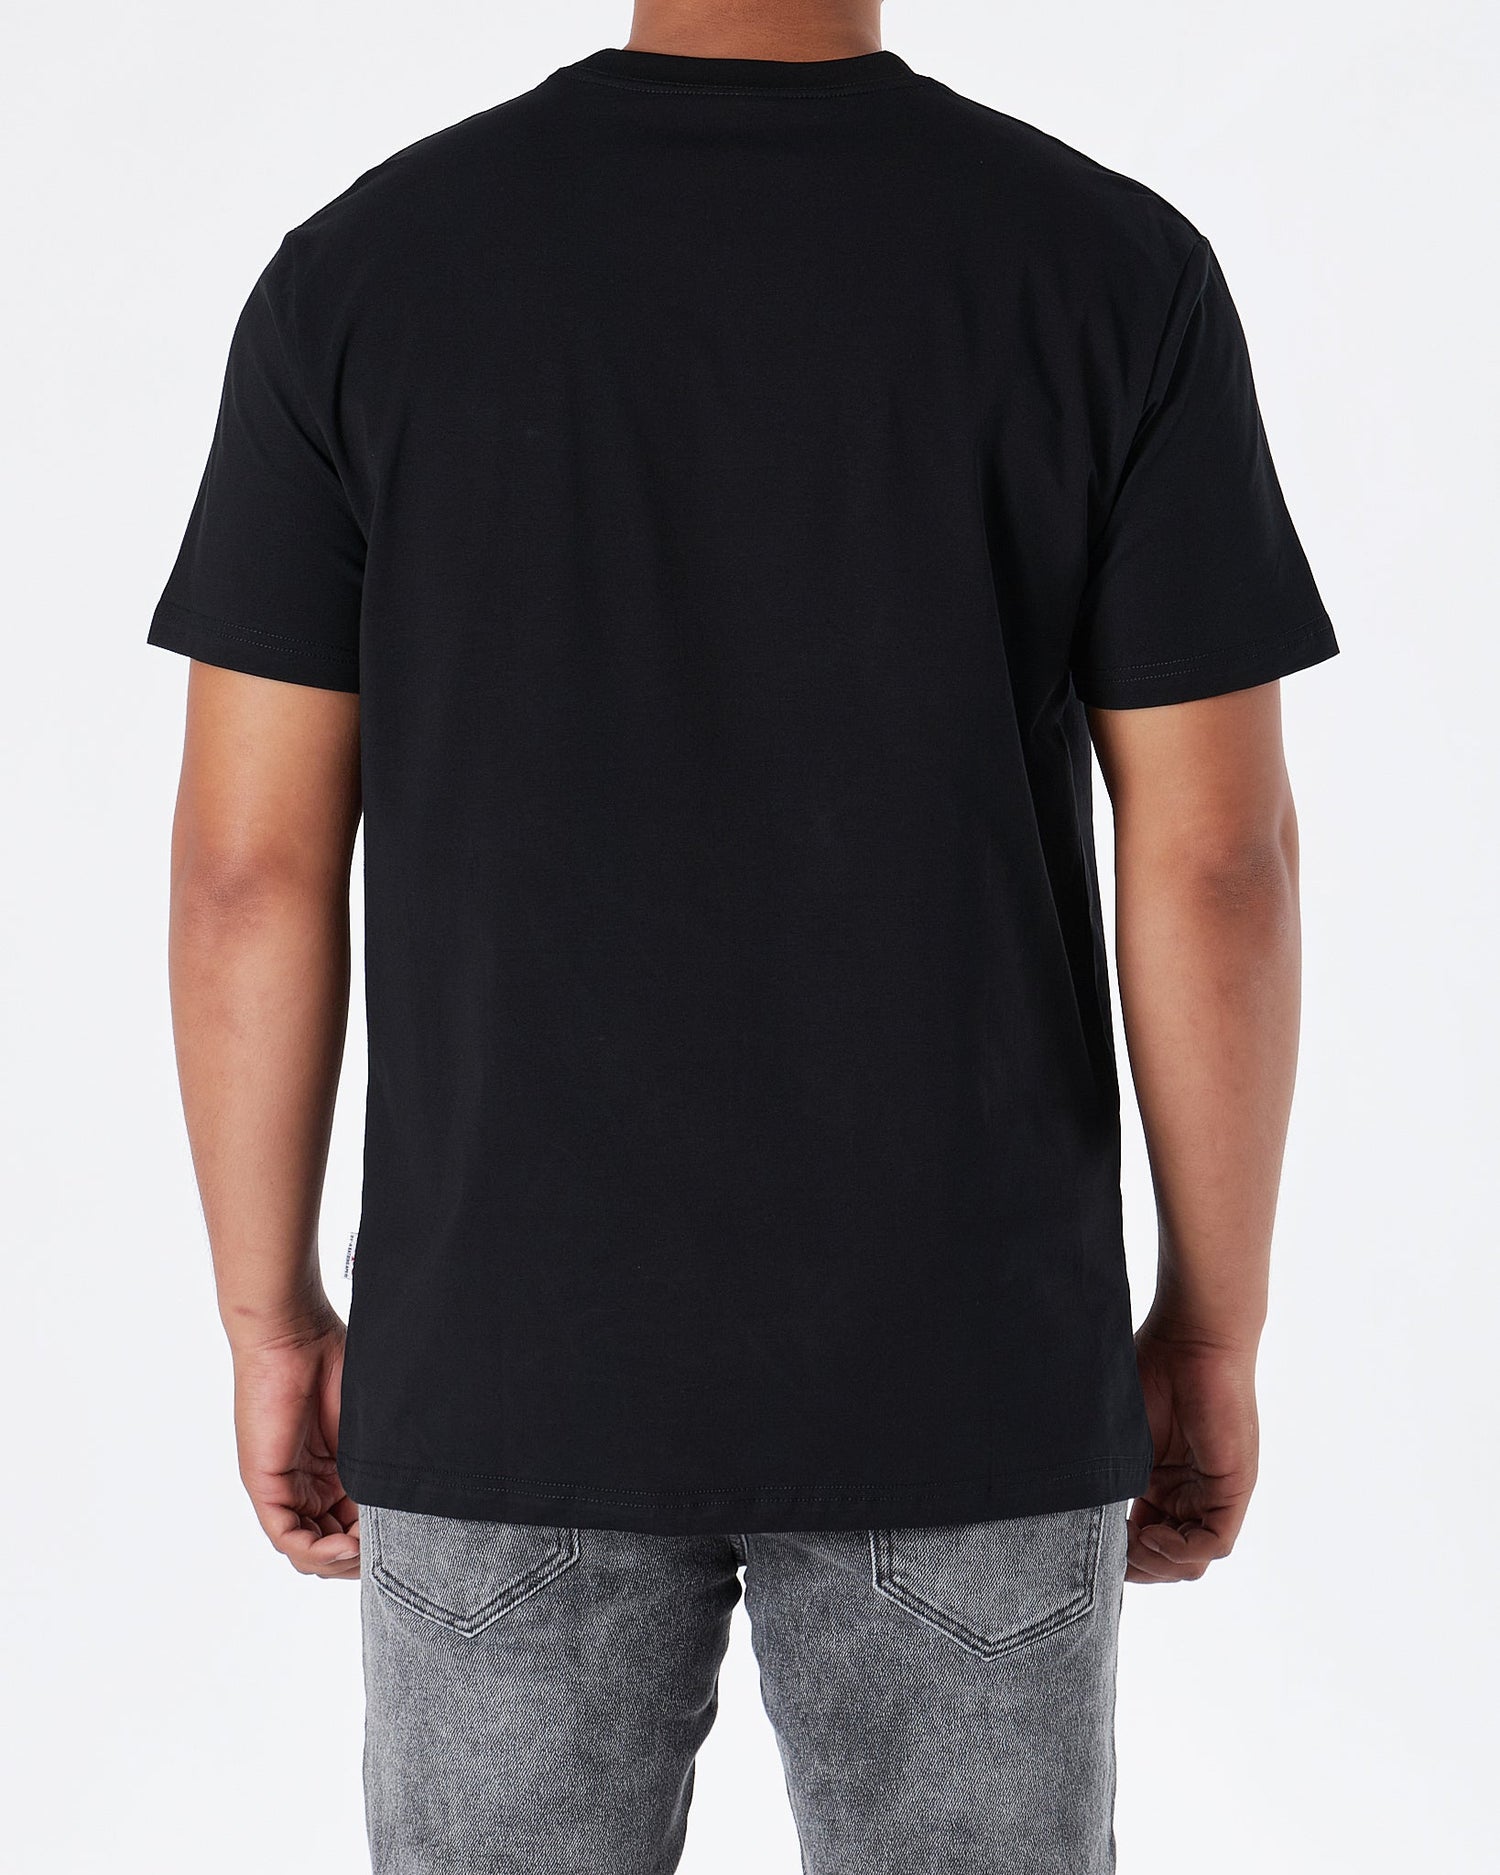 Gorilla Face Printed Men T-Shirt 14.90 - MOI OUTFIT